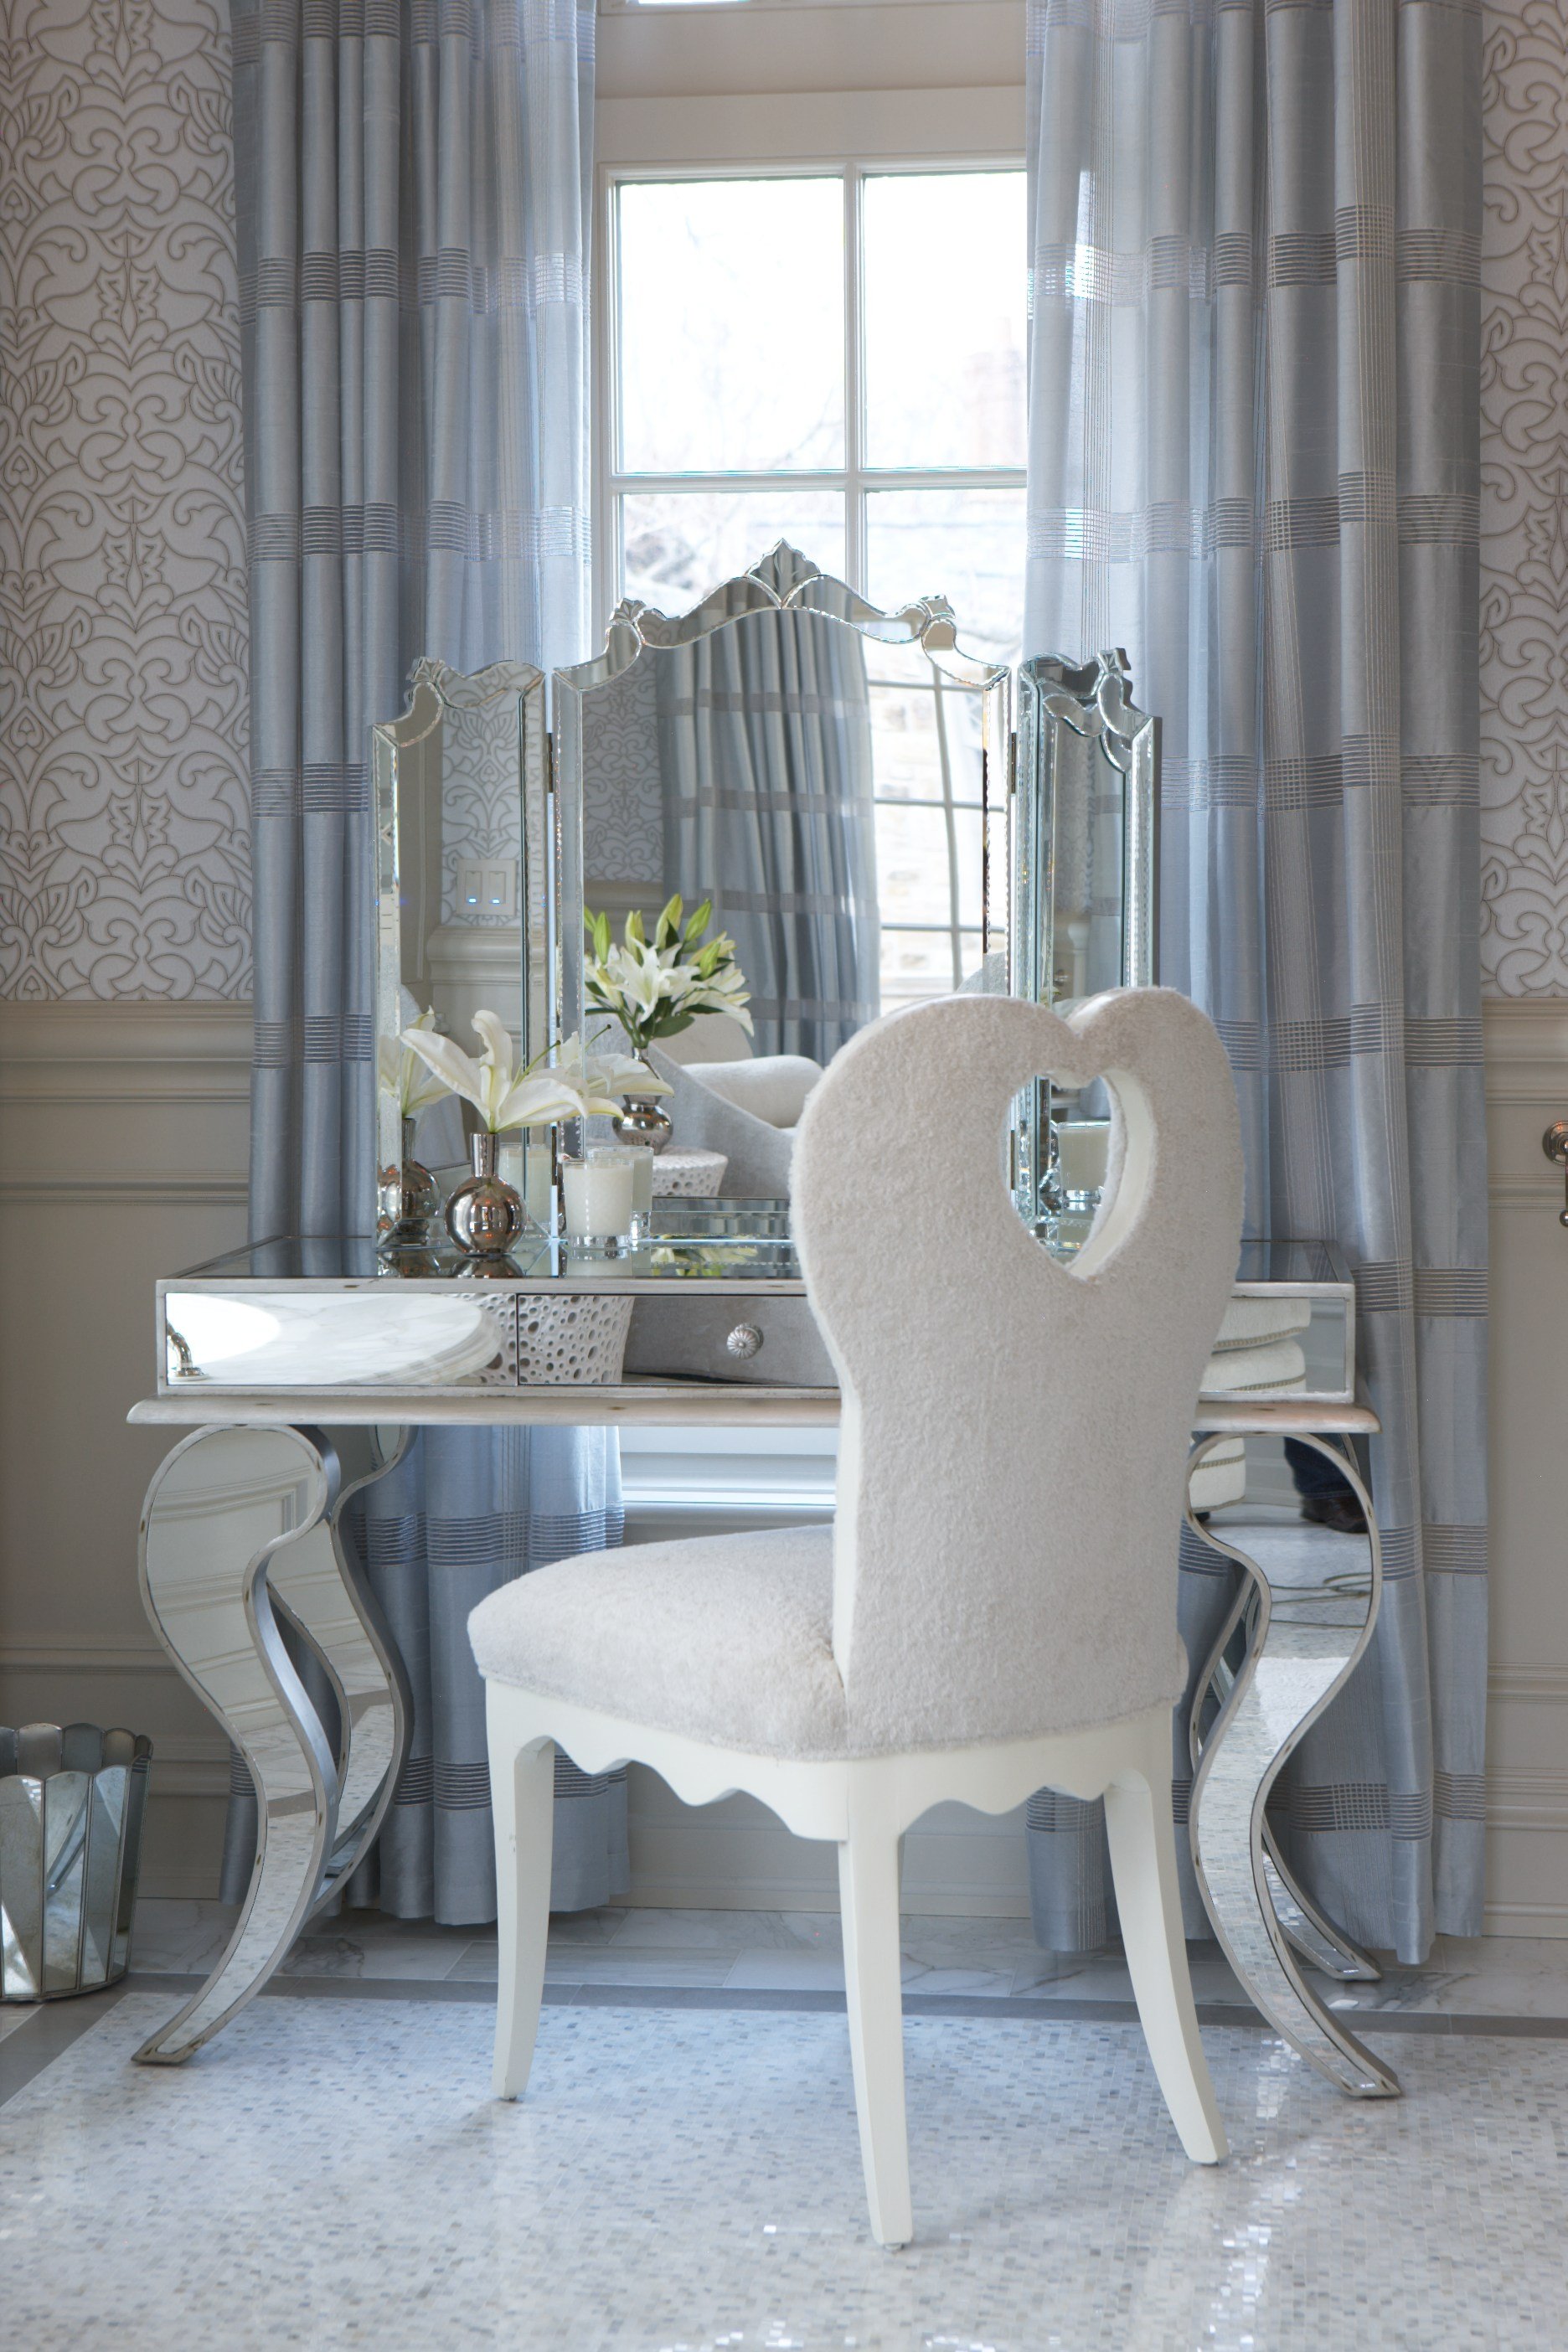 23-chic-white-blue-mirrored-detailed-vanity-rinfret-interior-designs.jpg